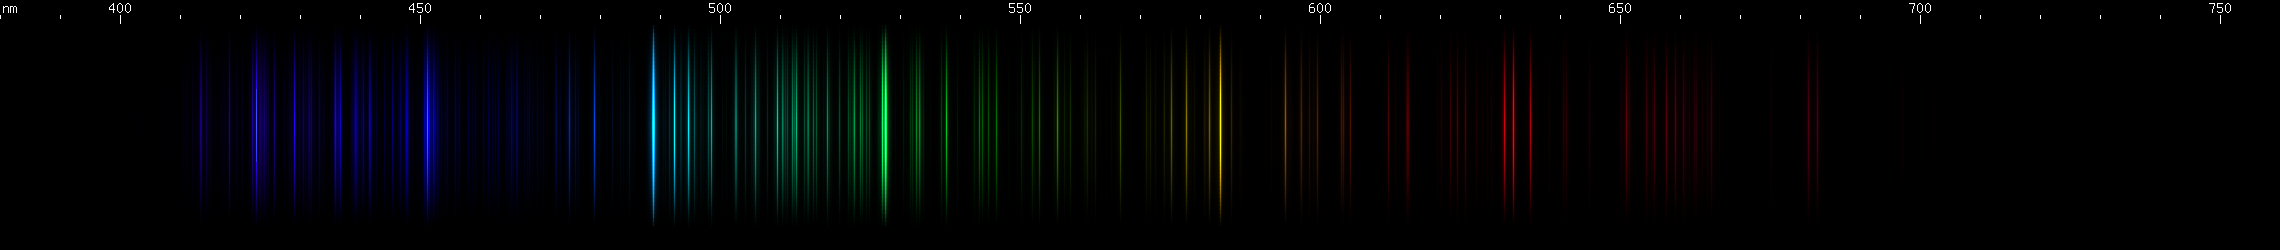 Spectral lines of Rhenium.